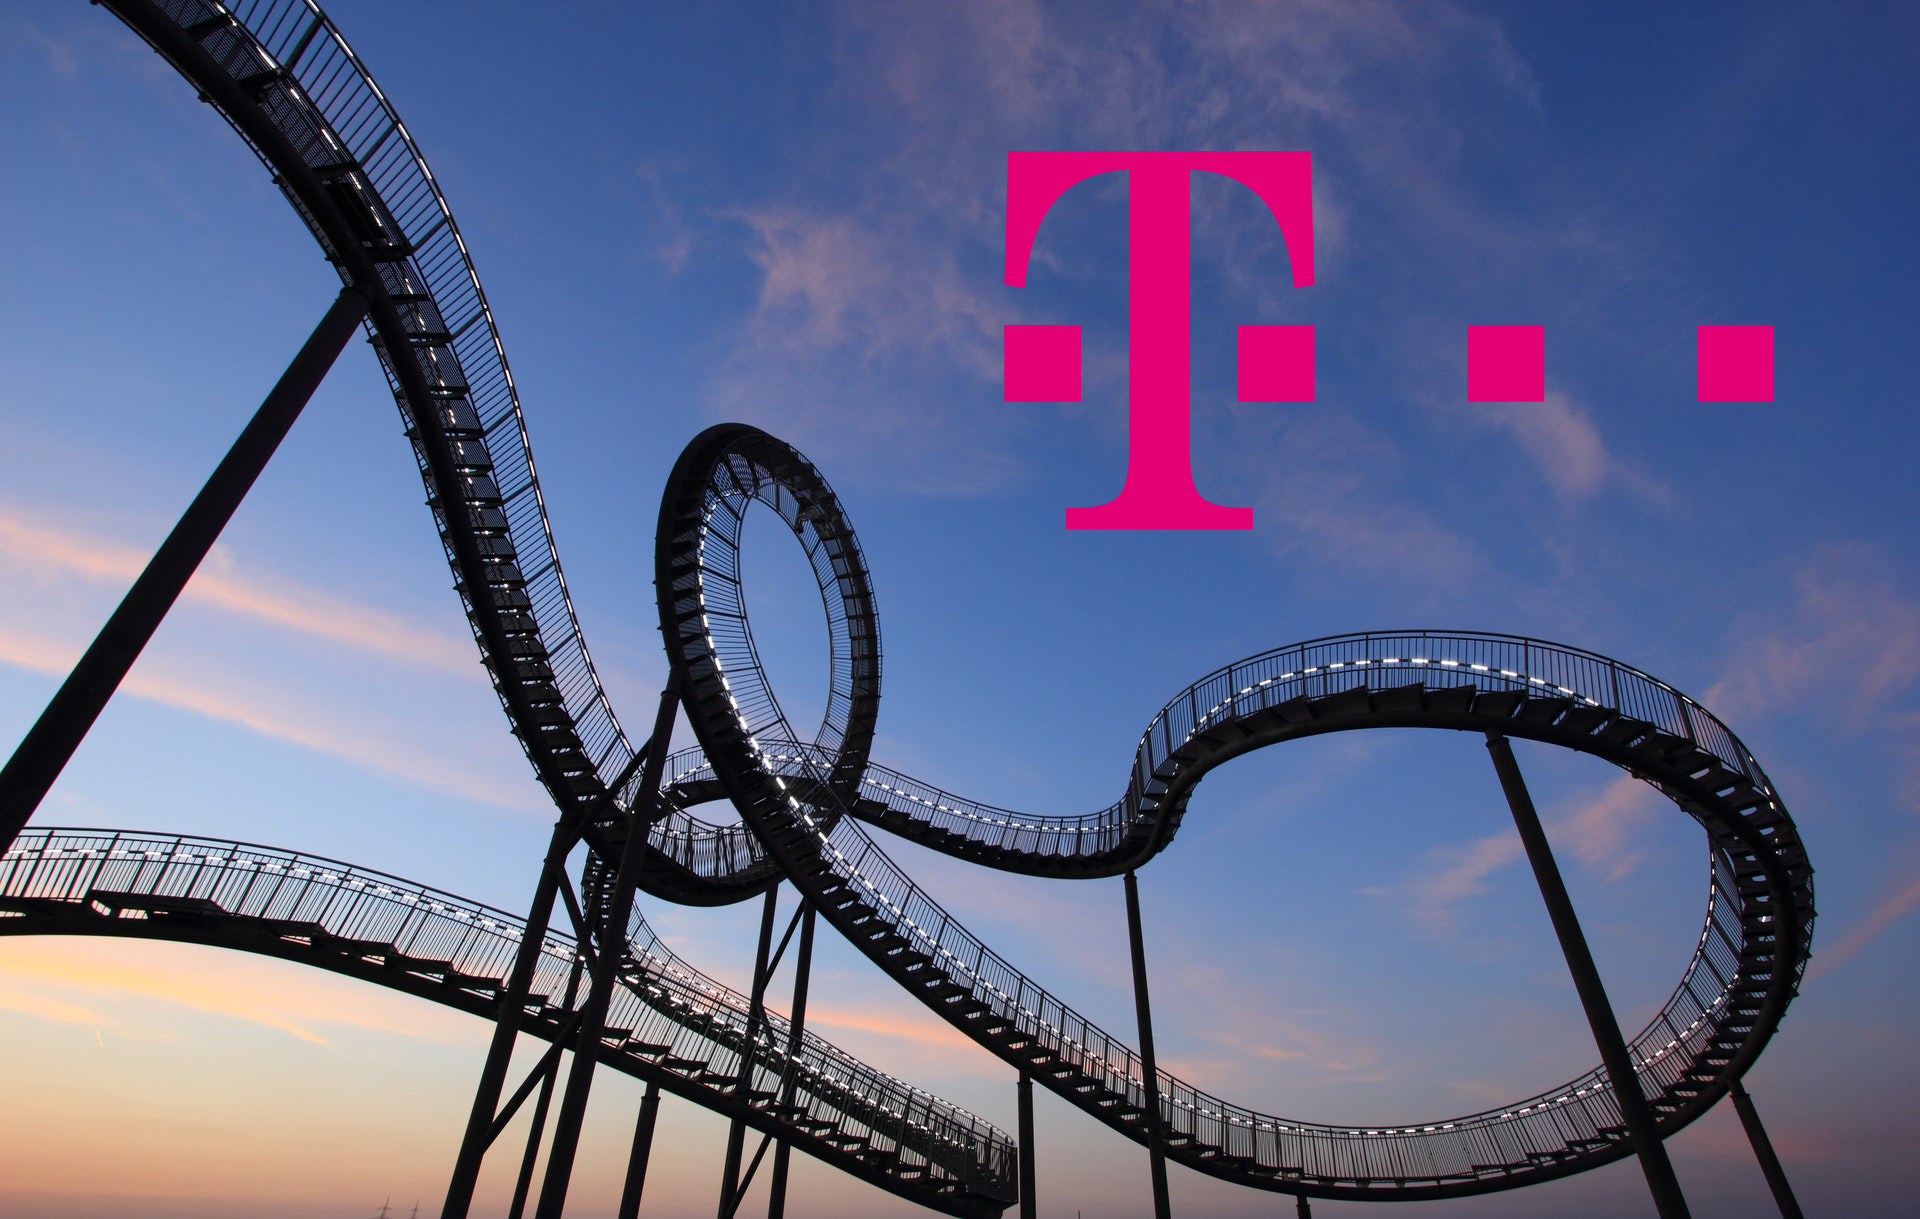 rollercoaster kolejka górska T-Mobile logo